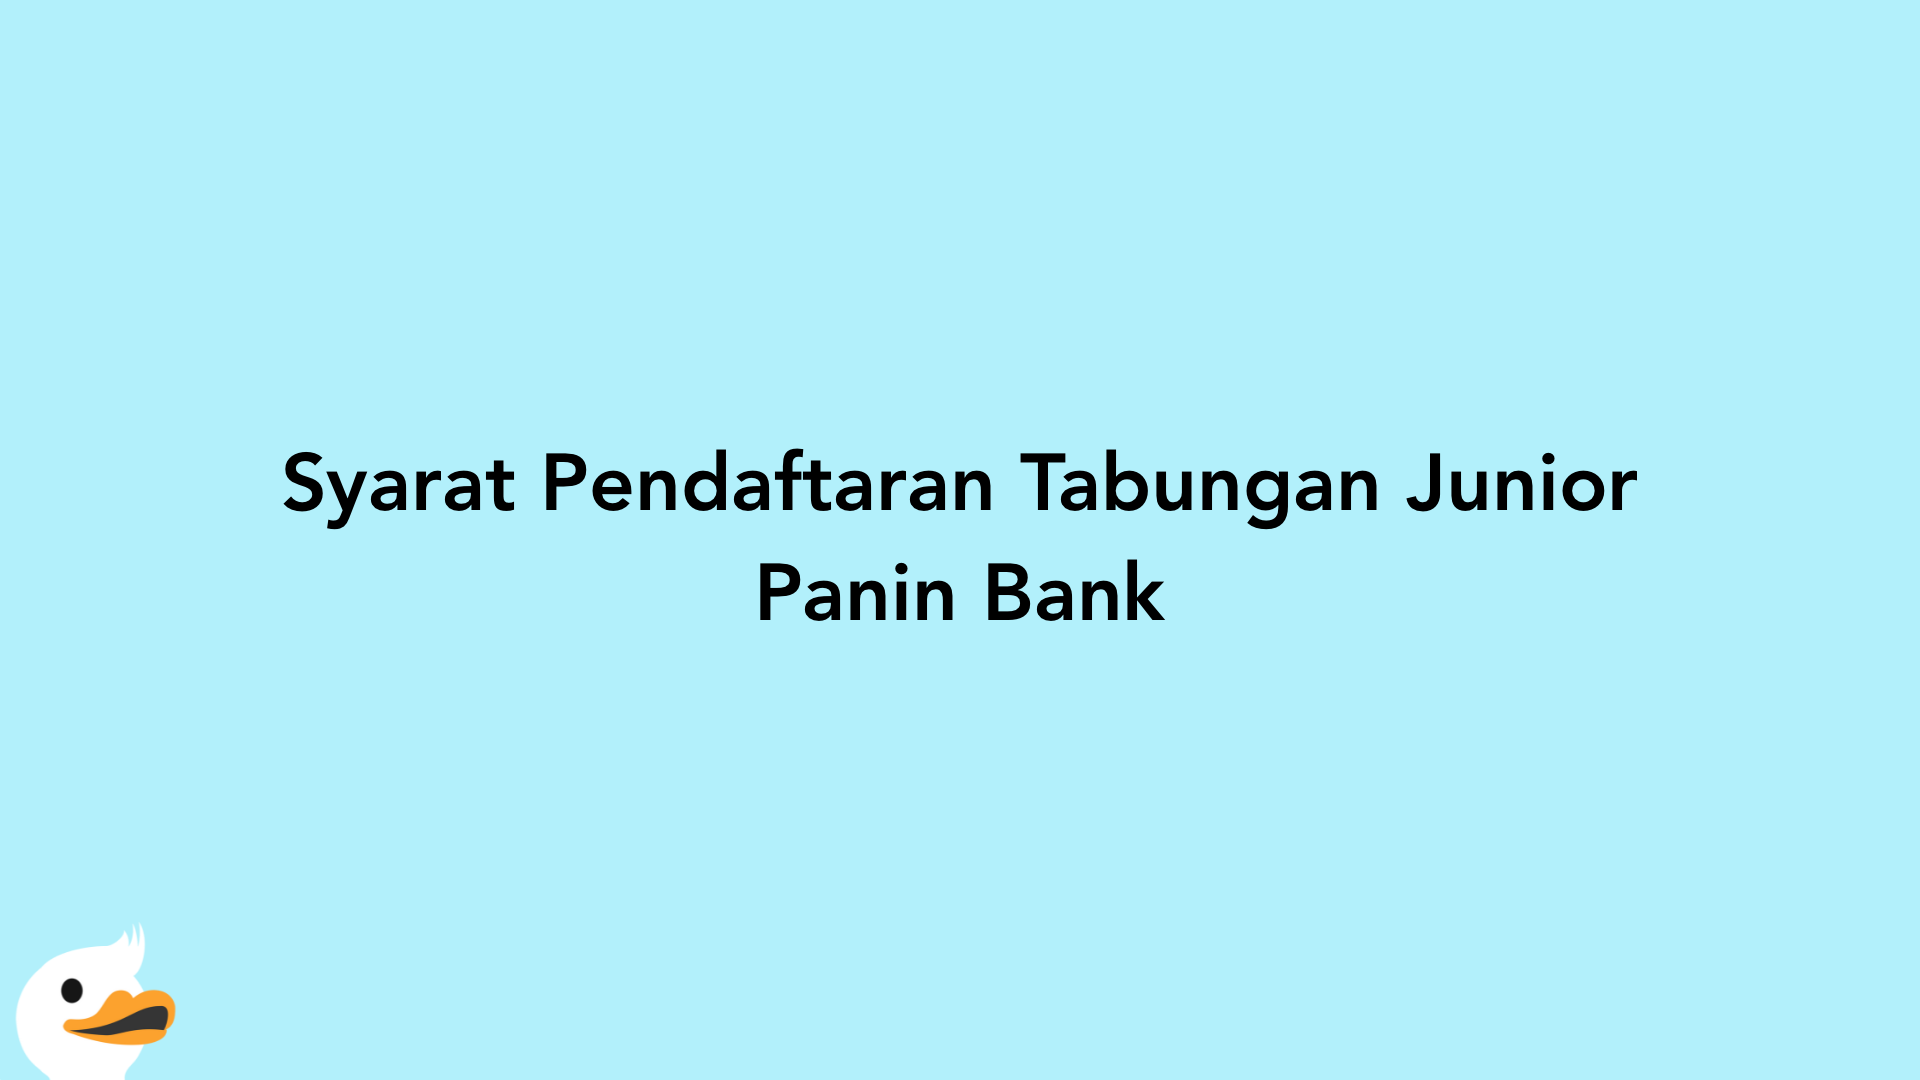 Syarat Pendaftaran Tabungan Junior Panin Bank